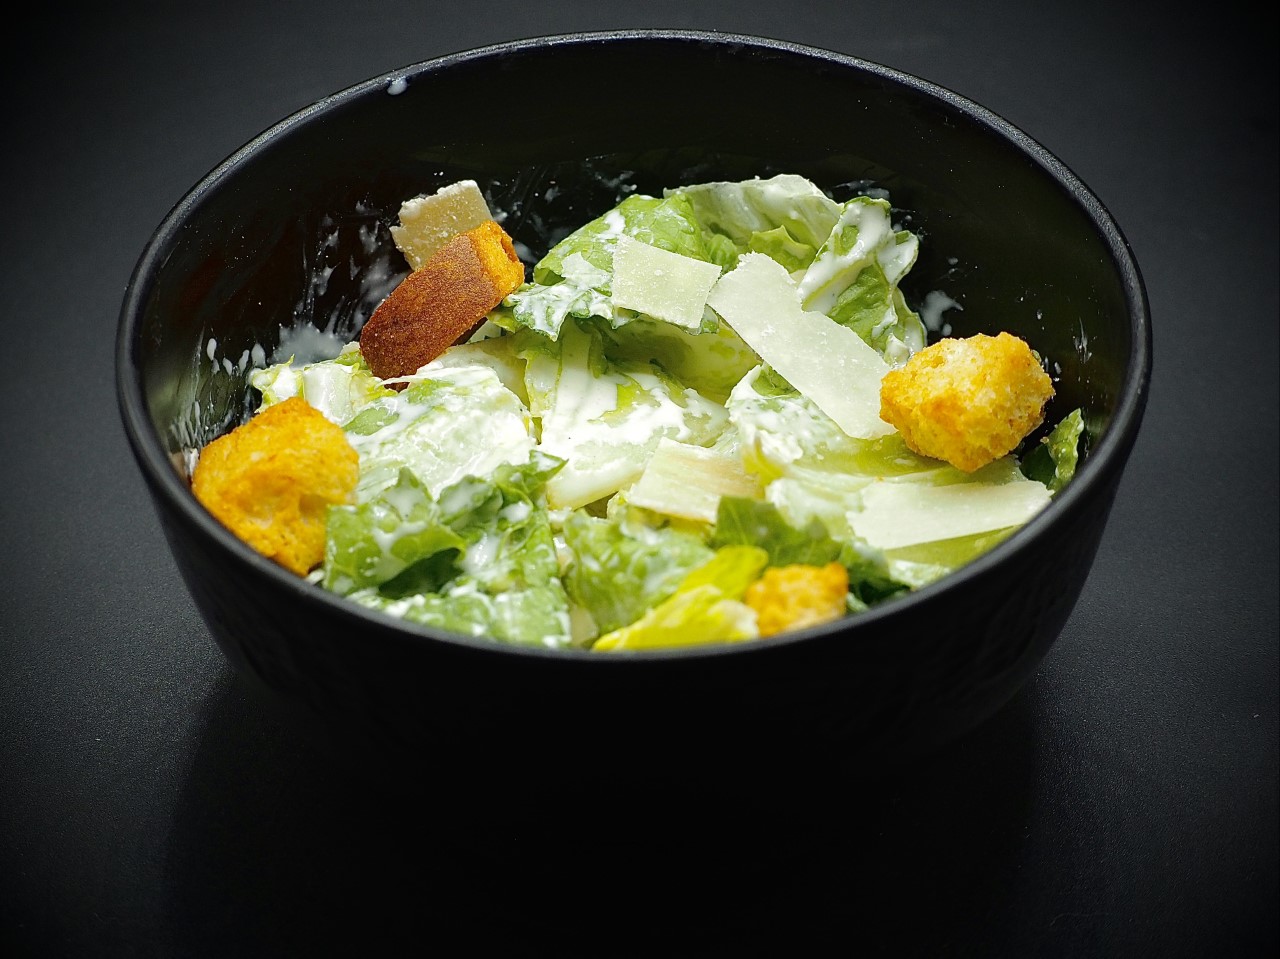 Homemade Ceasar Salad Dressing “Carrabbas-Style”